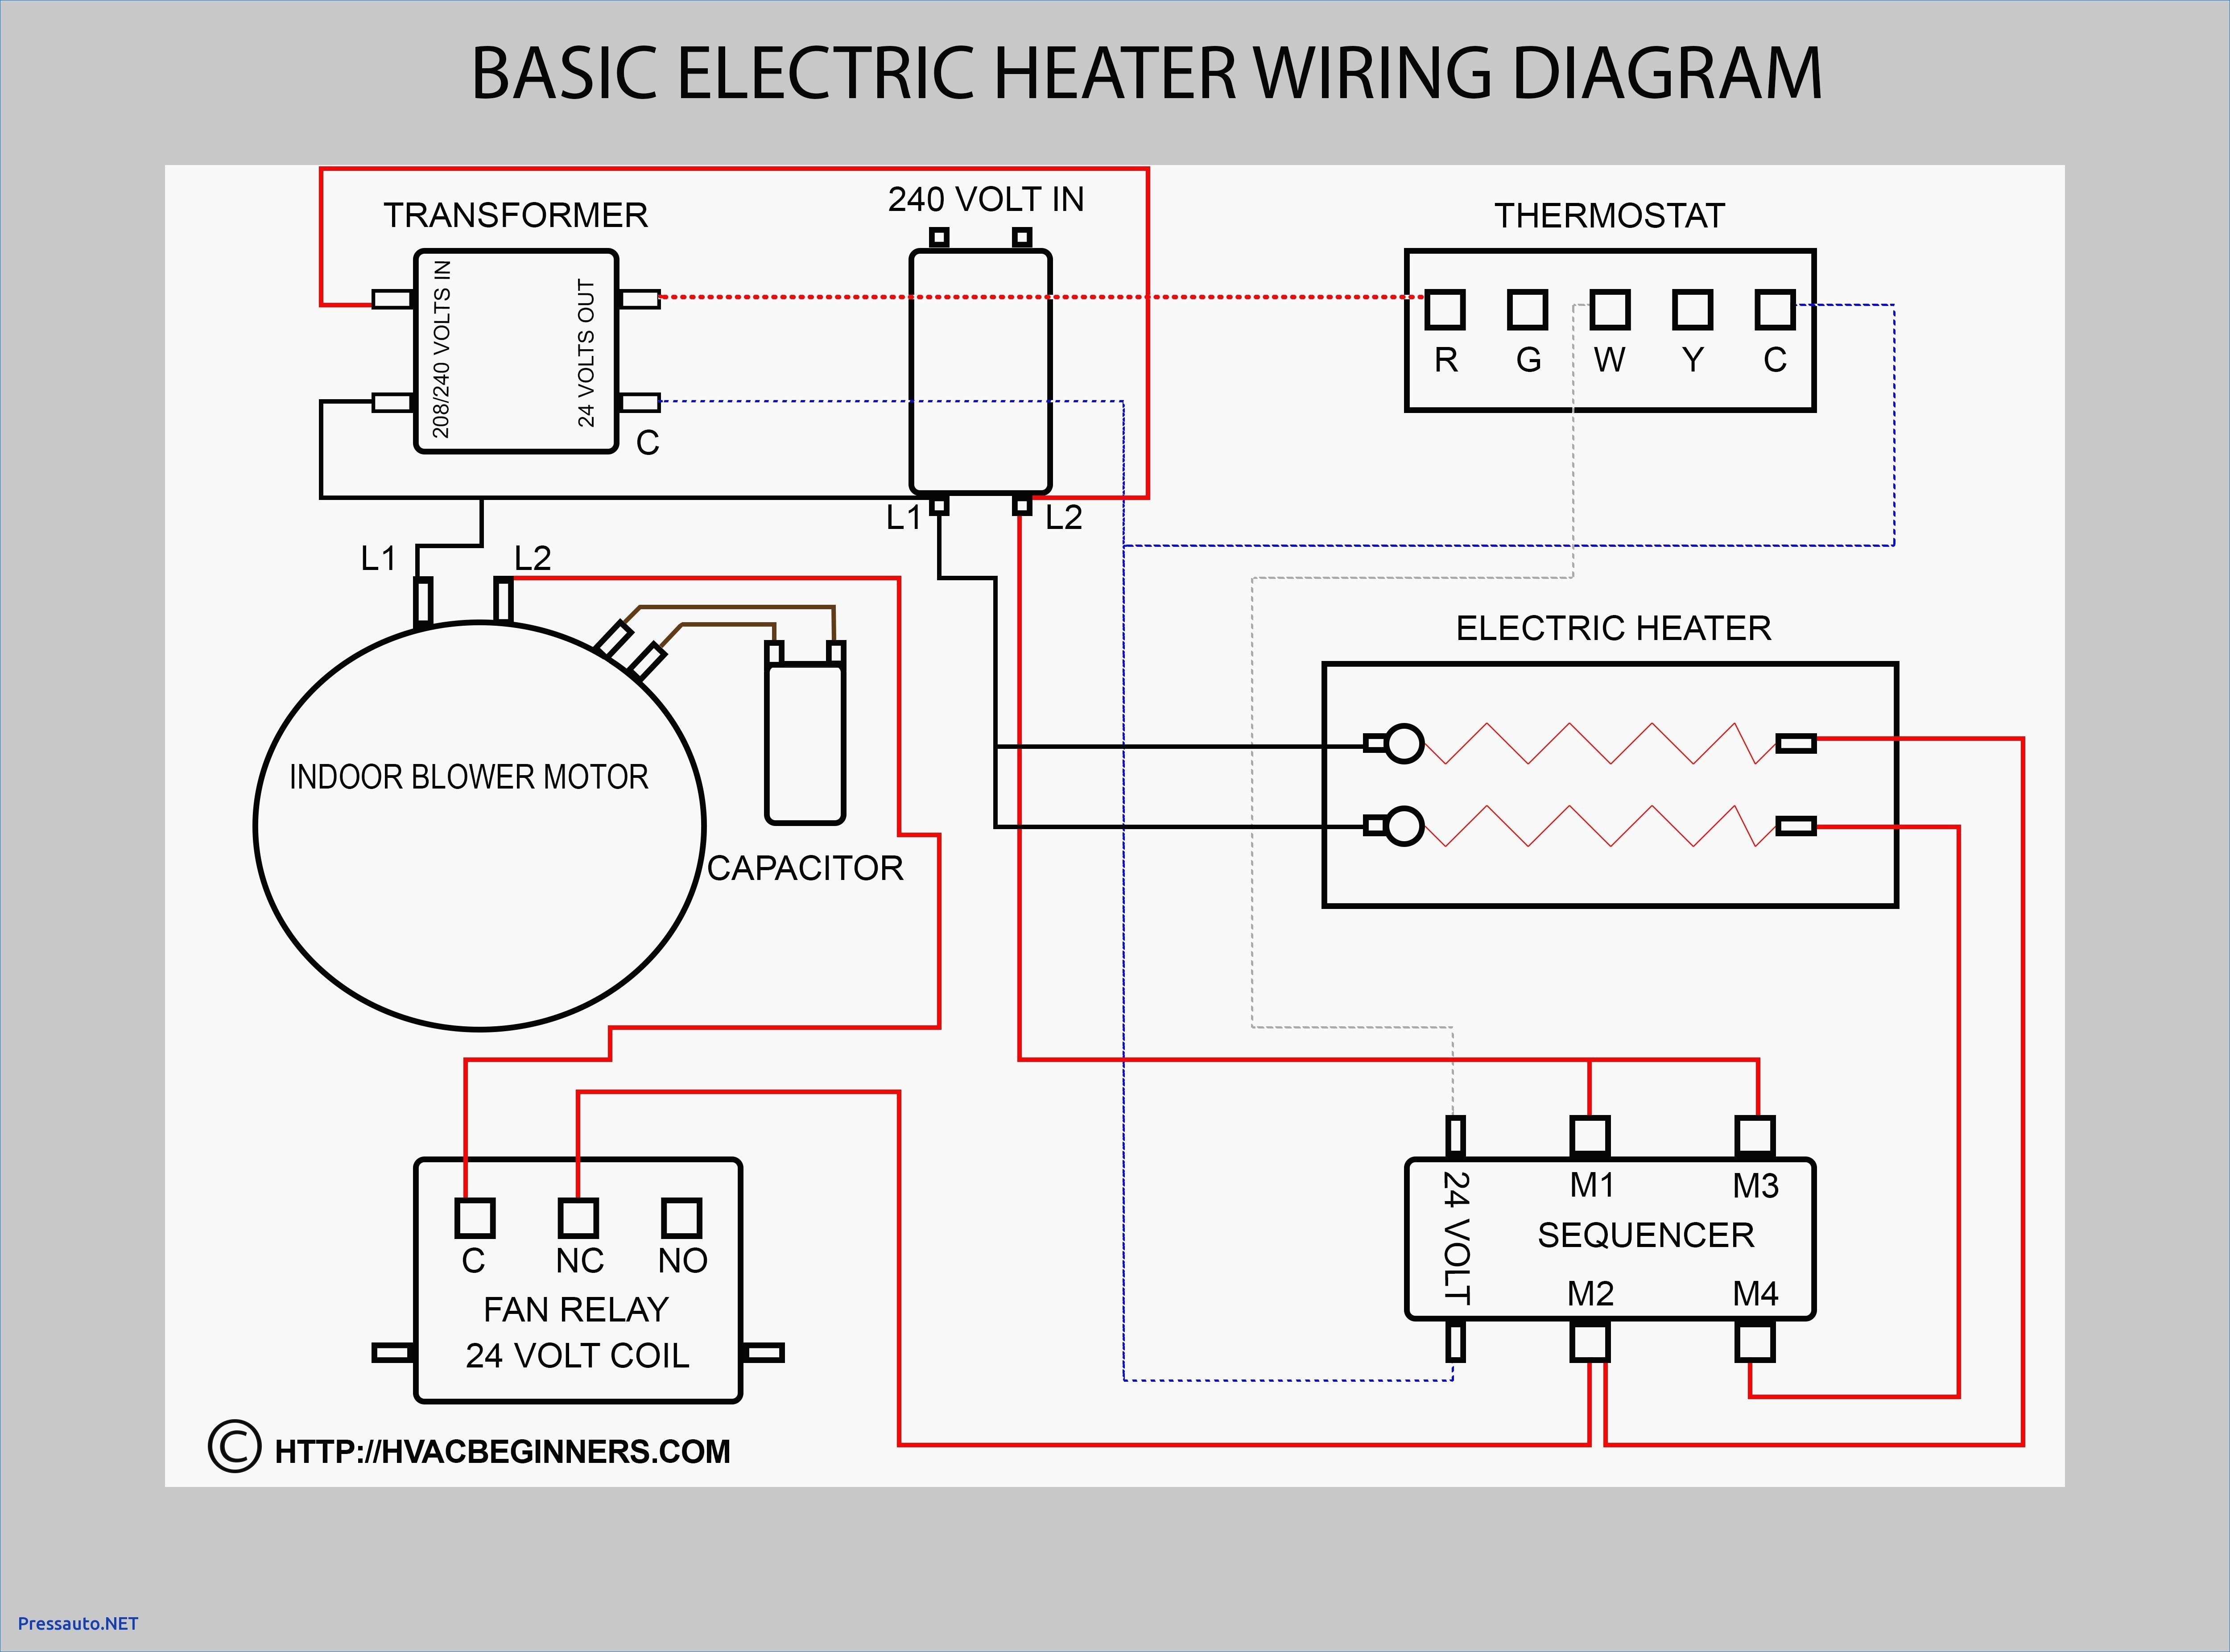 Carrier thermostat Wiring Diagram Elegant Heat Pump thermostat Wiring Diagram Diagram Of Carrier thermostat Wiring Diagram